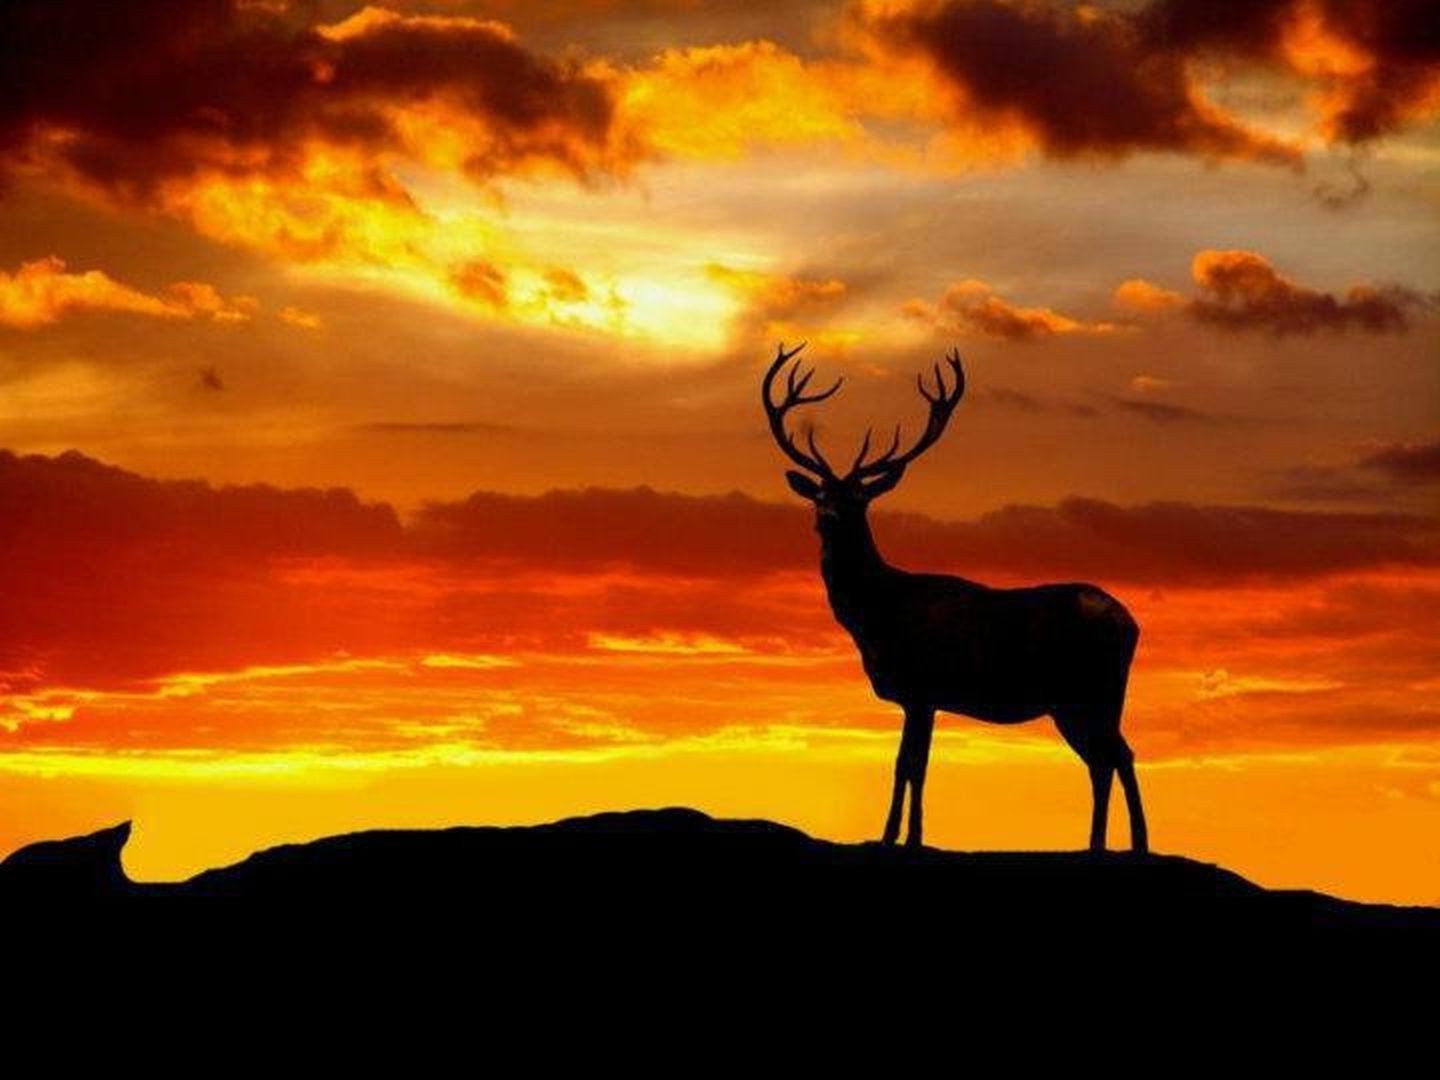 stag wallpaper,sky,wildlife,deer,sunset,silhouette